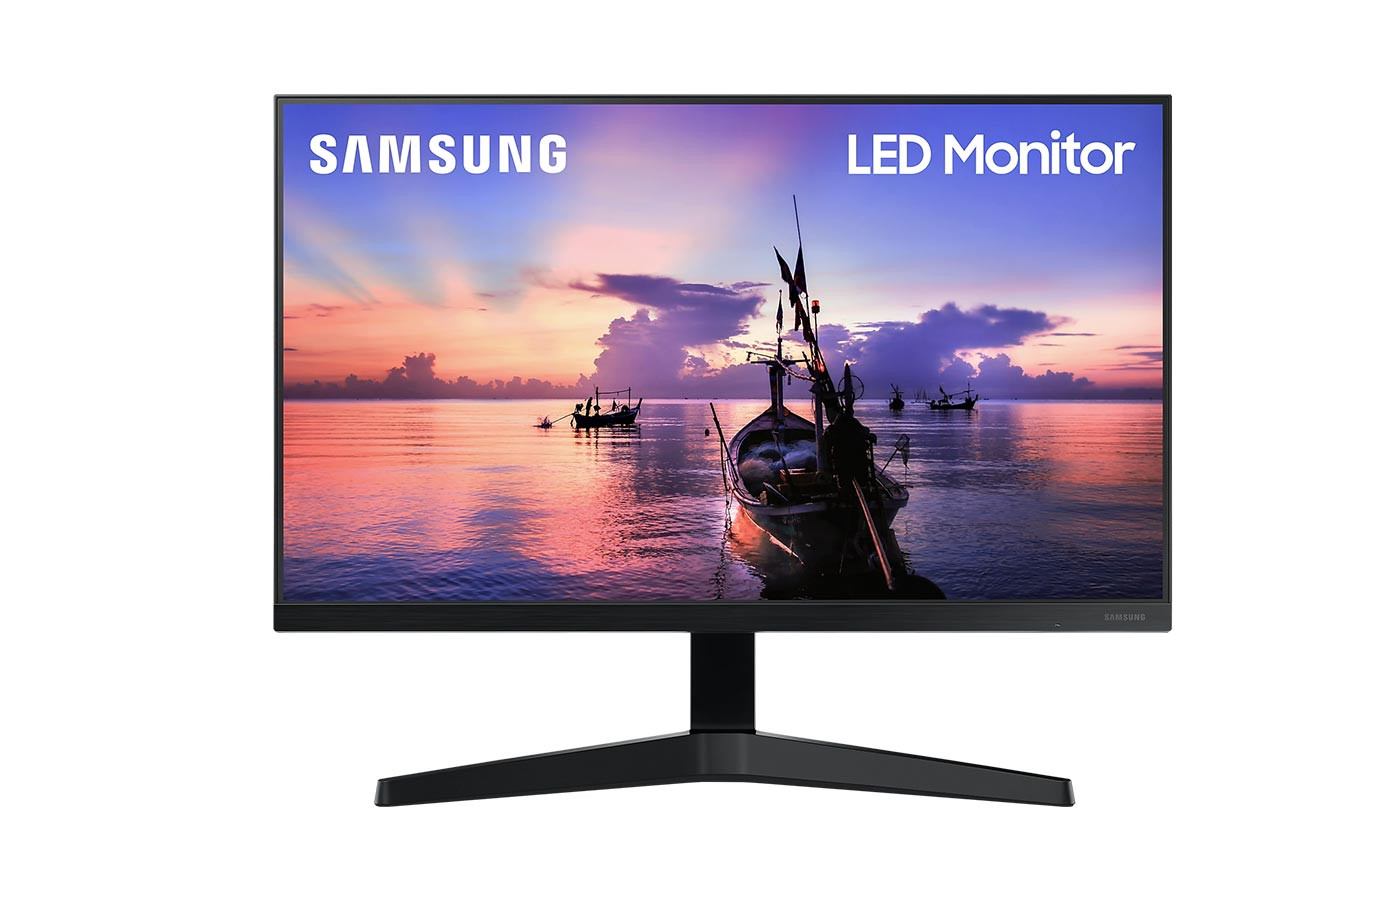 Samsung FHD Monitor, IPS, 75 Hz, Bezel Less Design, AMD FreeSync, HDMI, D-sub, (LF24T350FHWXXL, Dark Blue Gray)